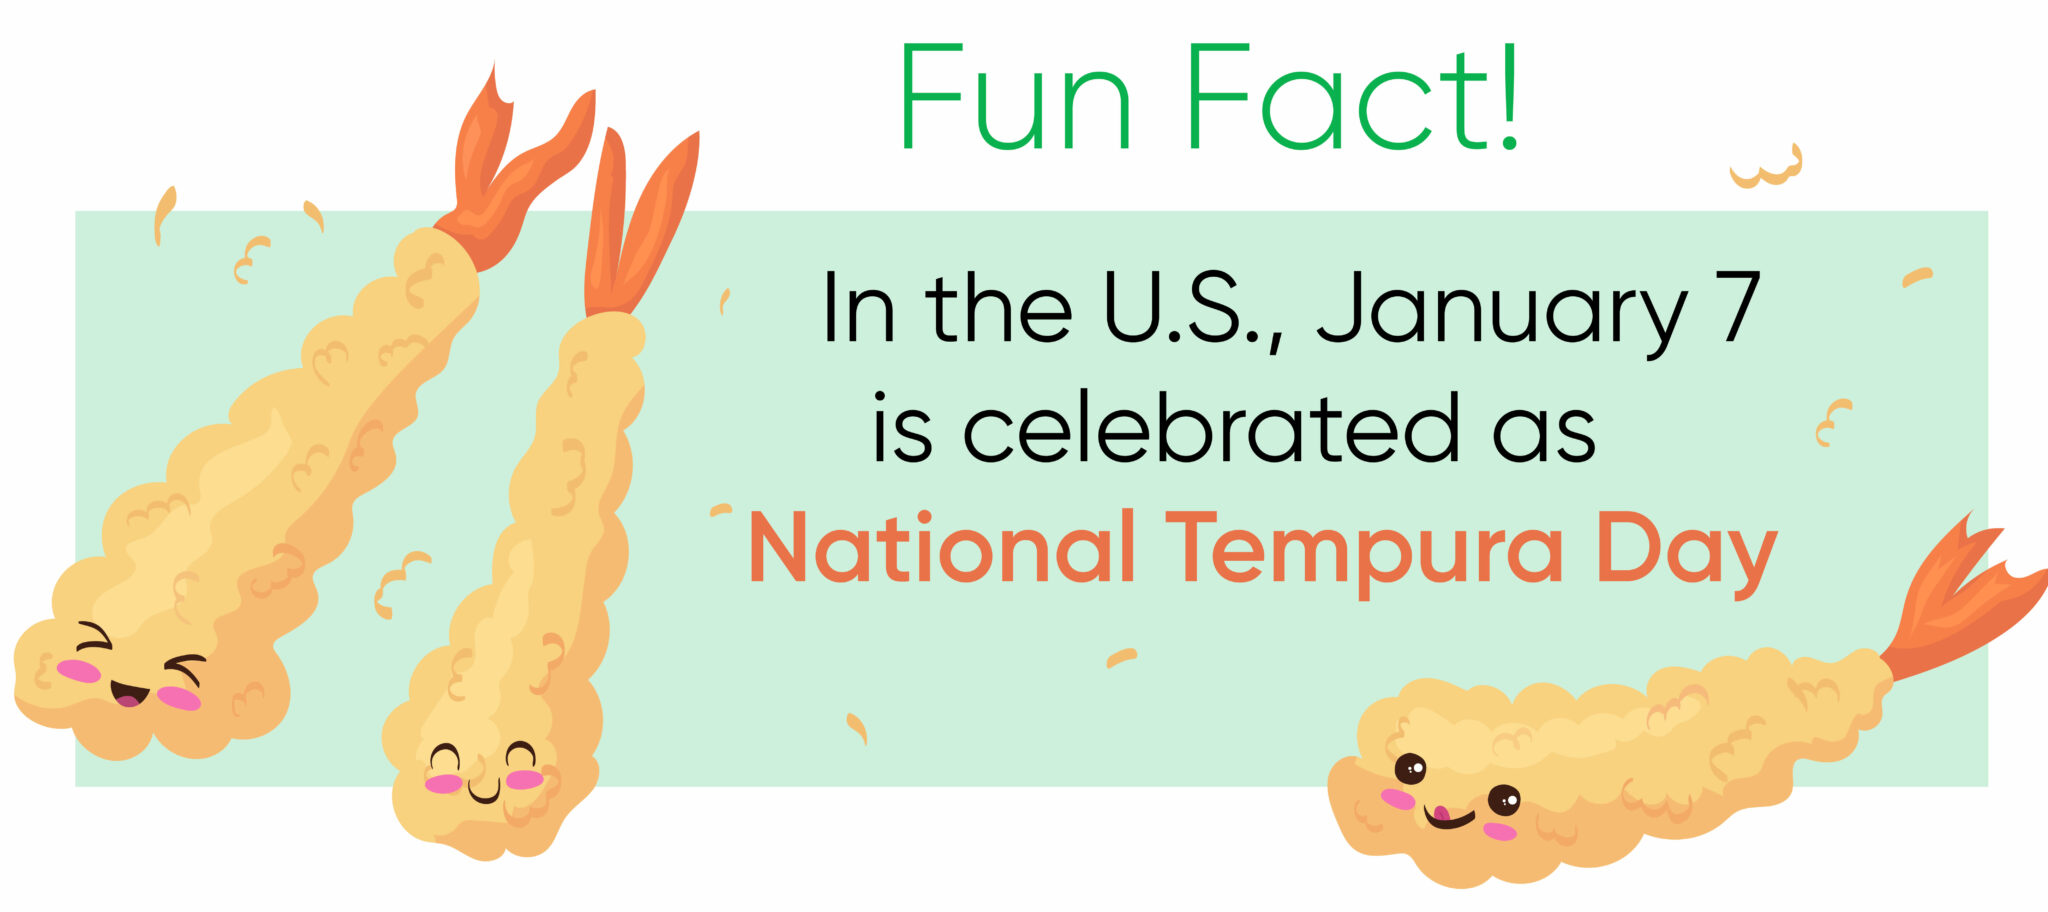 Fun Fact Tempura Day Jan 7